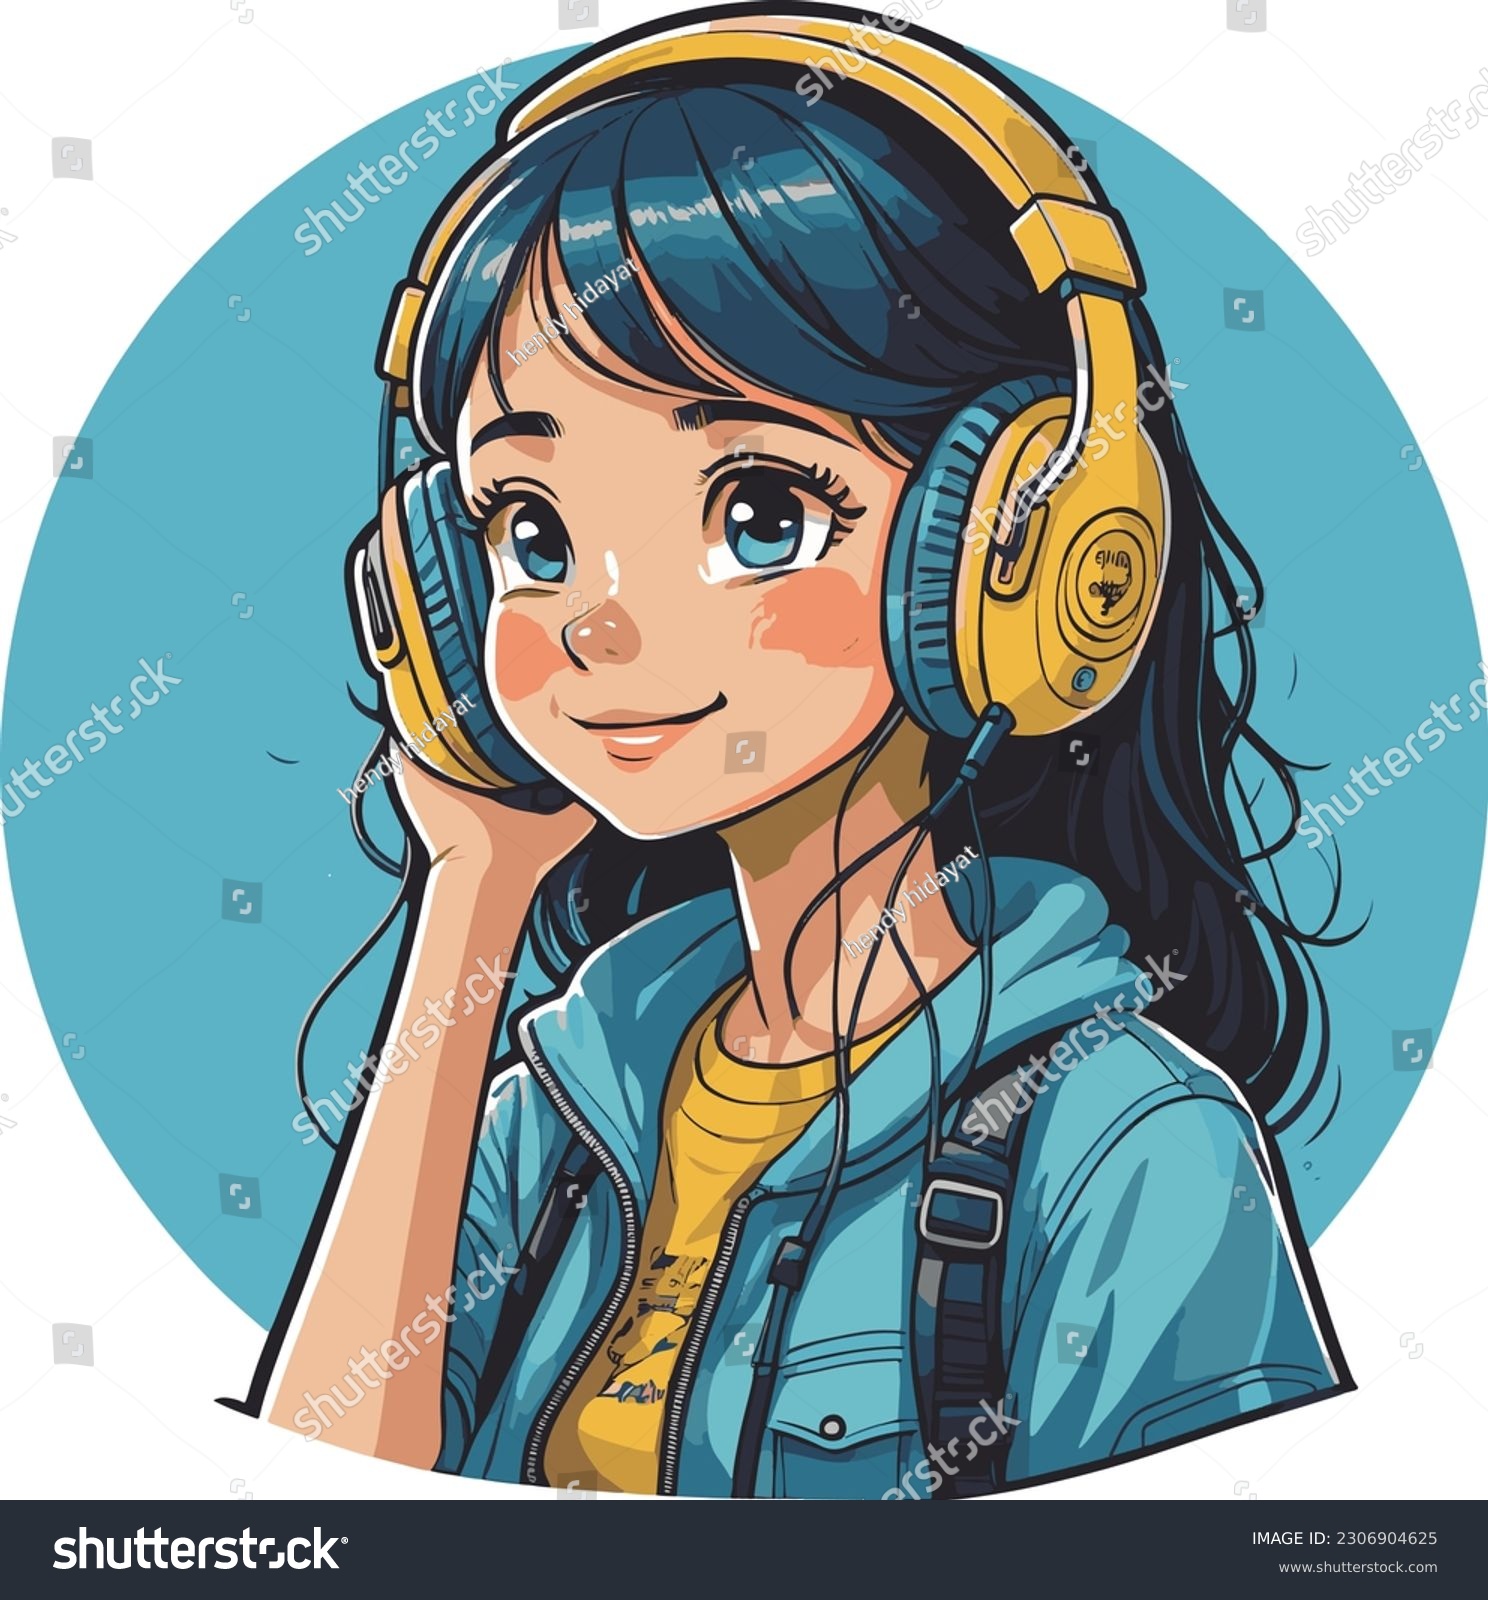 along chiqs share anime girl wearing headphones photos